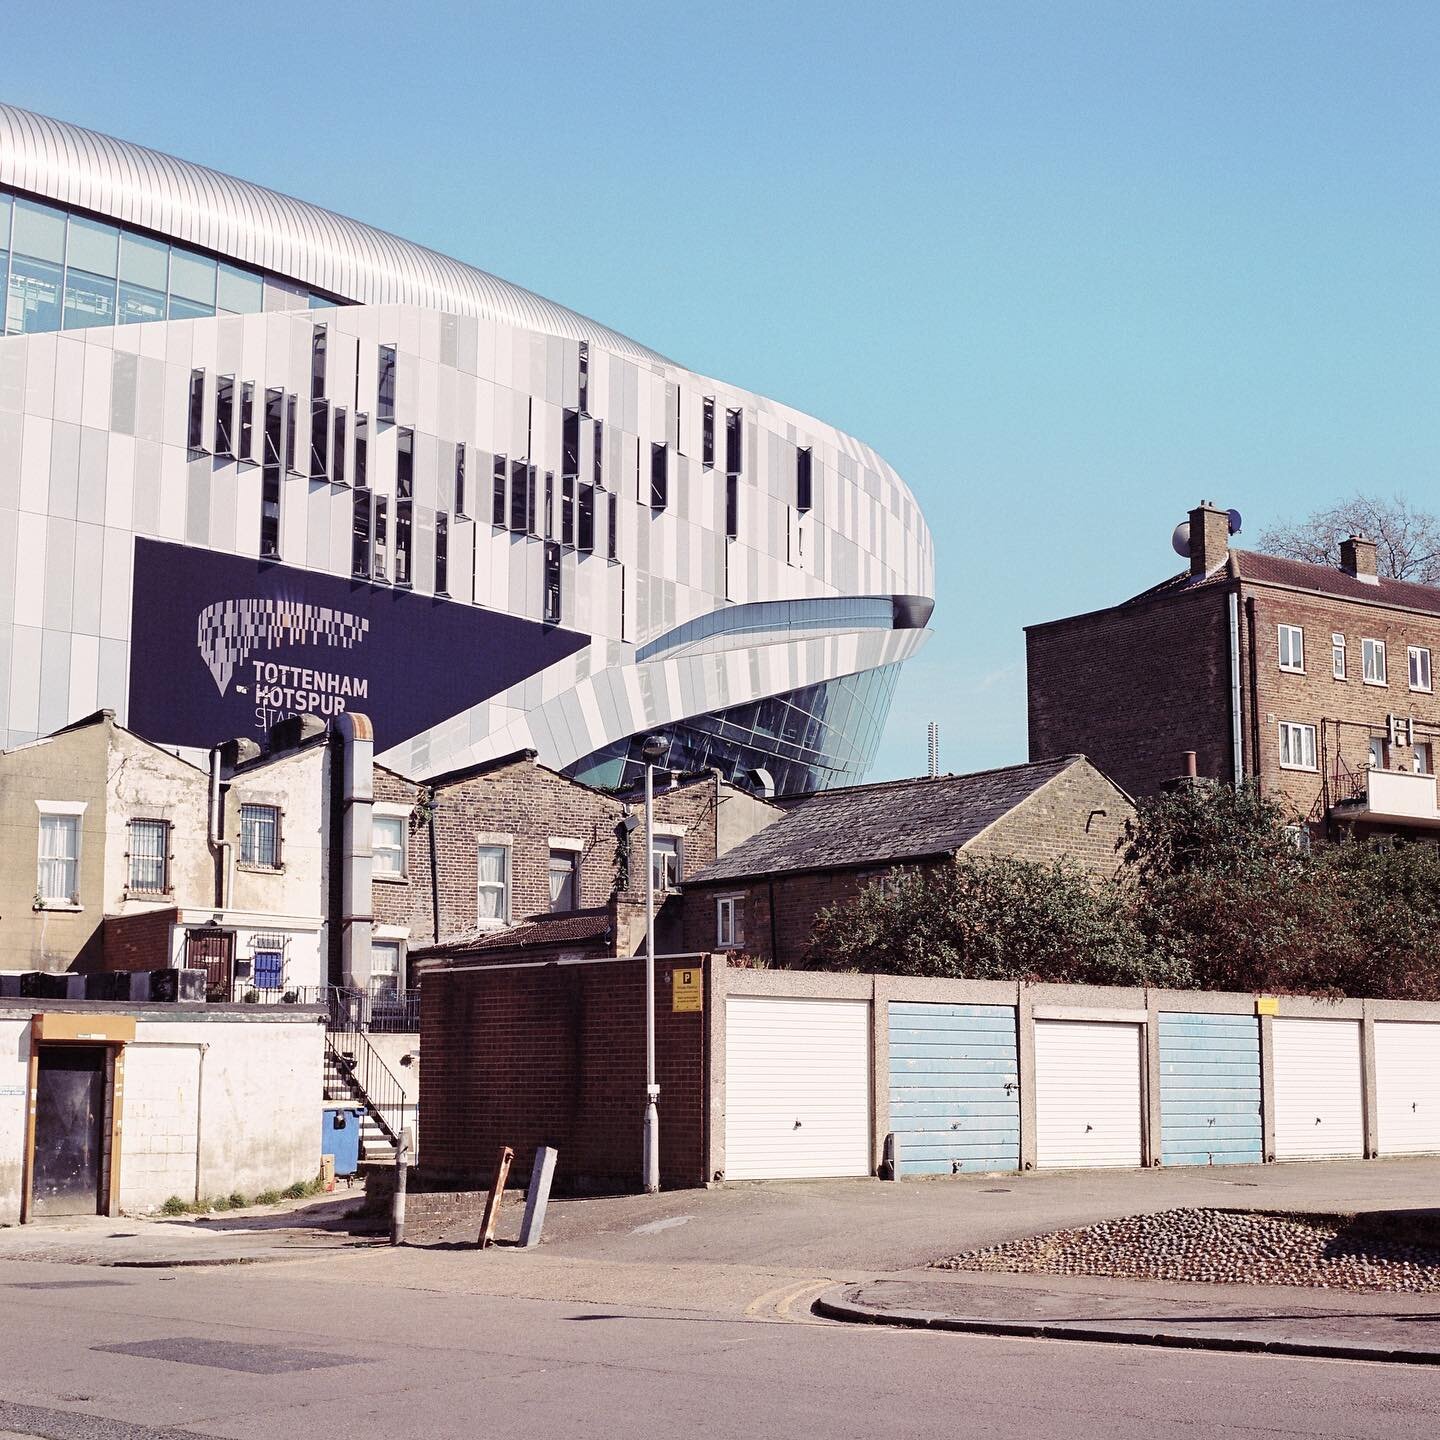 Tottenham Hotspur Stadium from Whitehall Street, Almond Road and Love Lane, N17 &bull; April, 2021

#6x6film